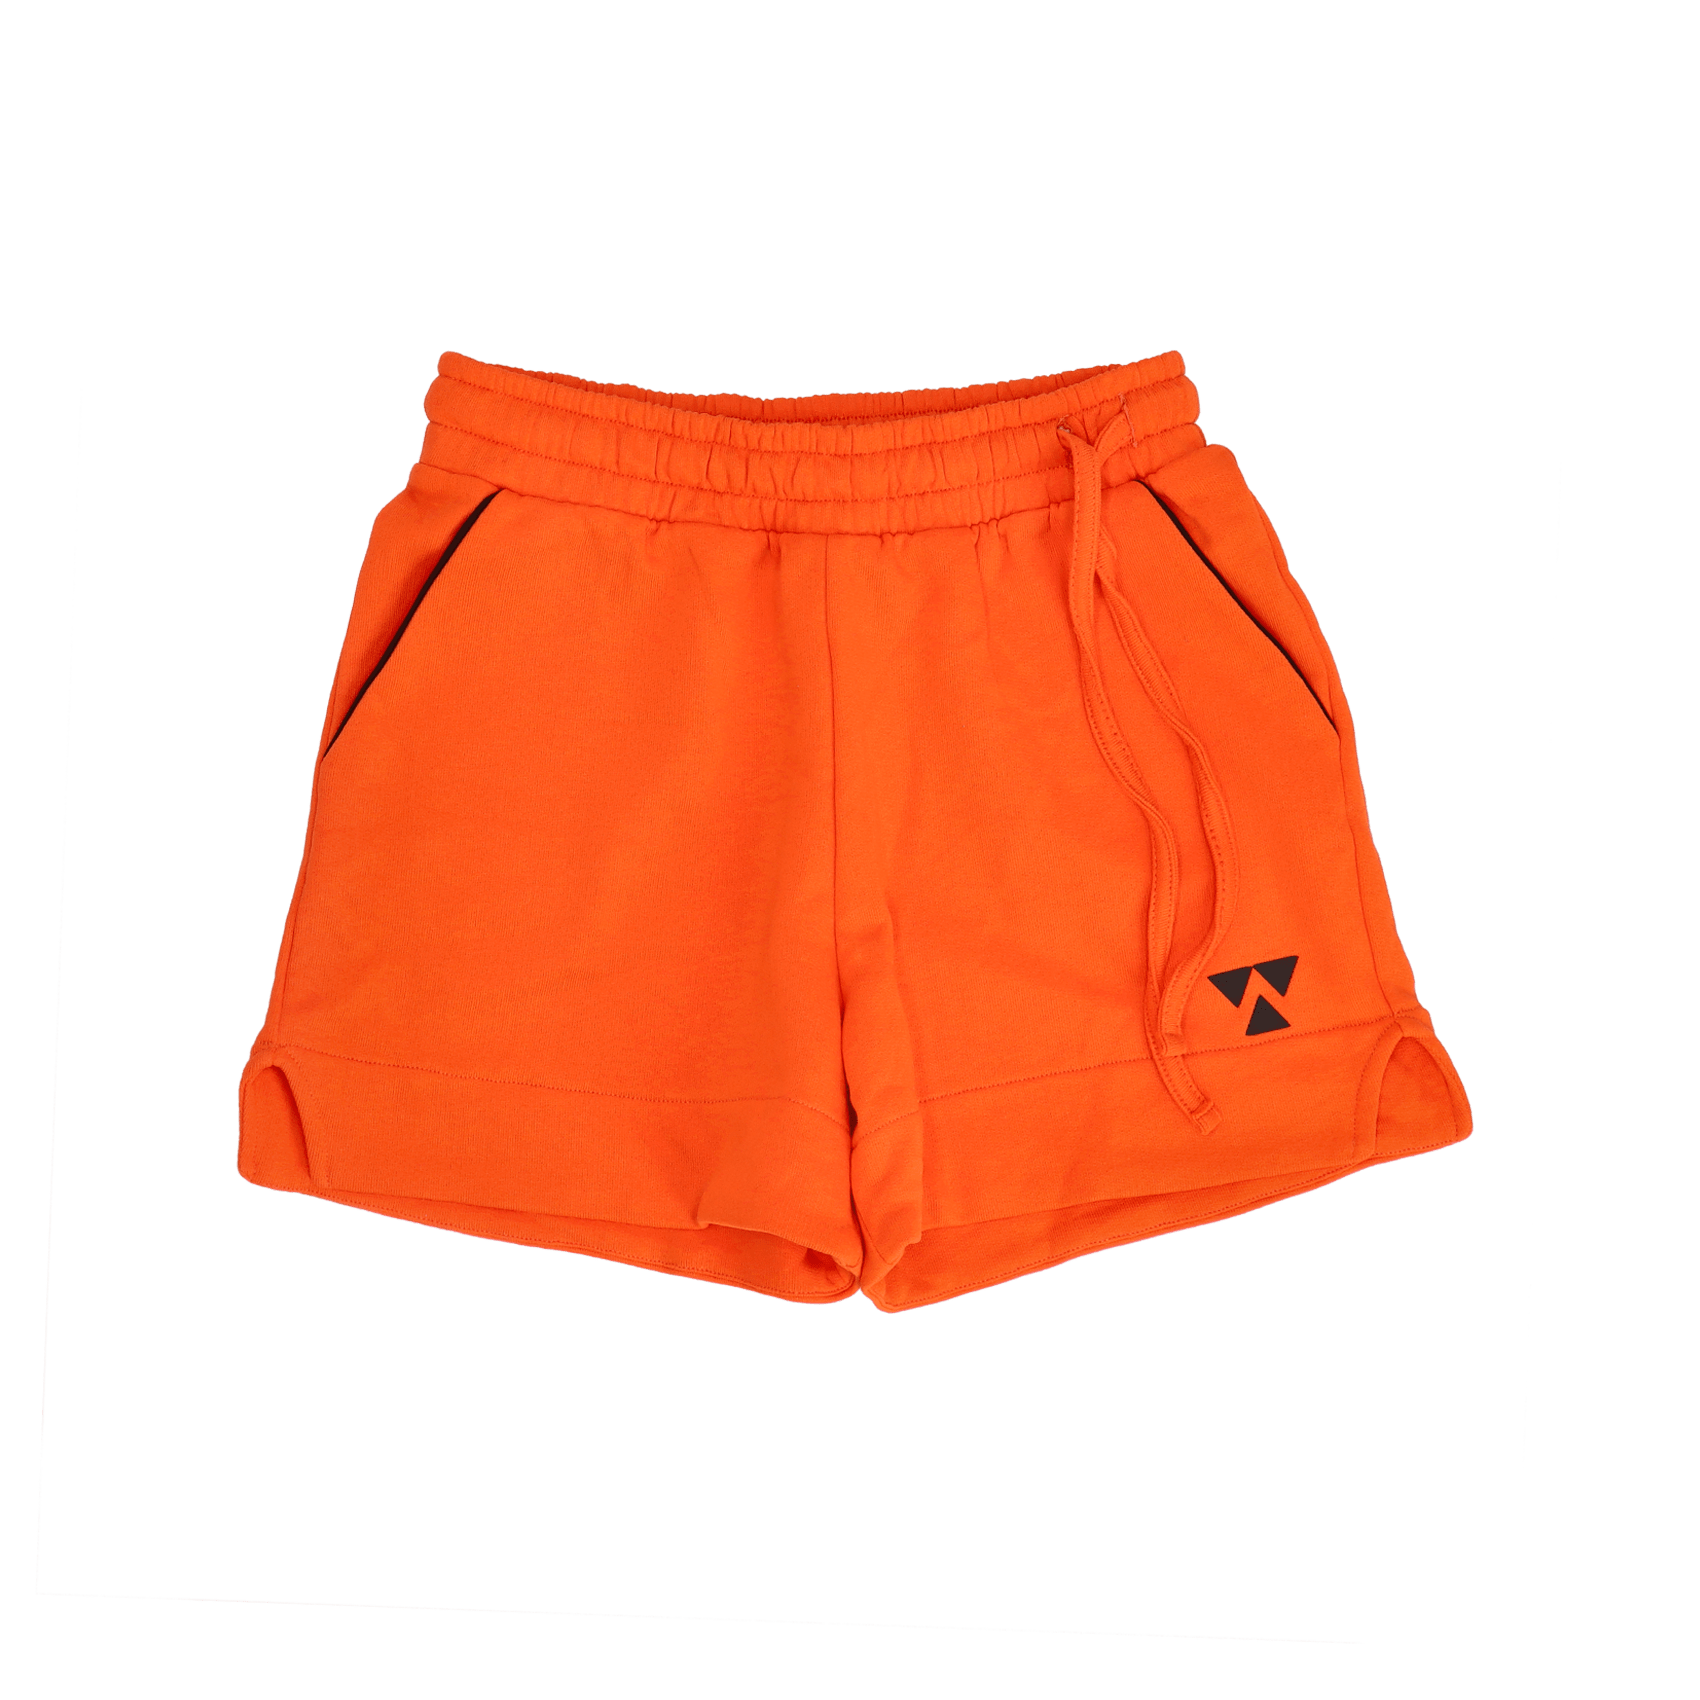 Short - Orange.